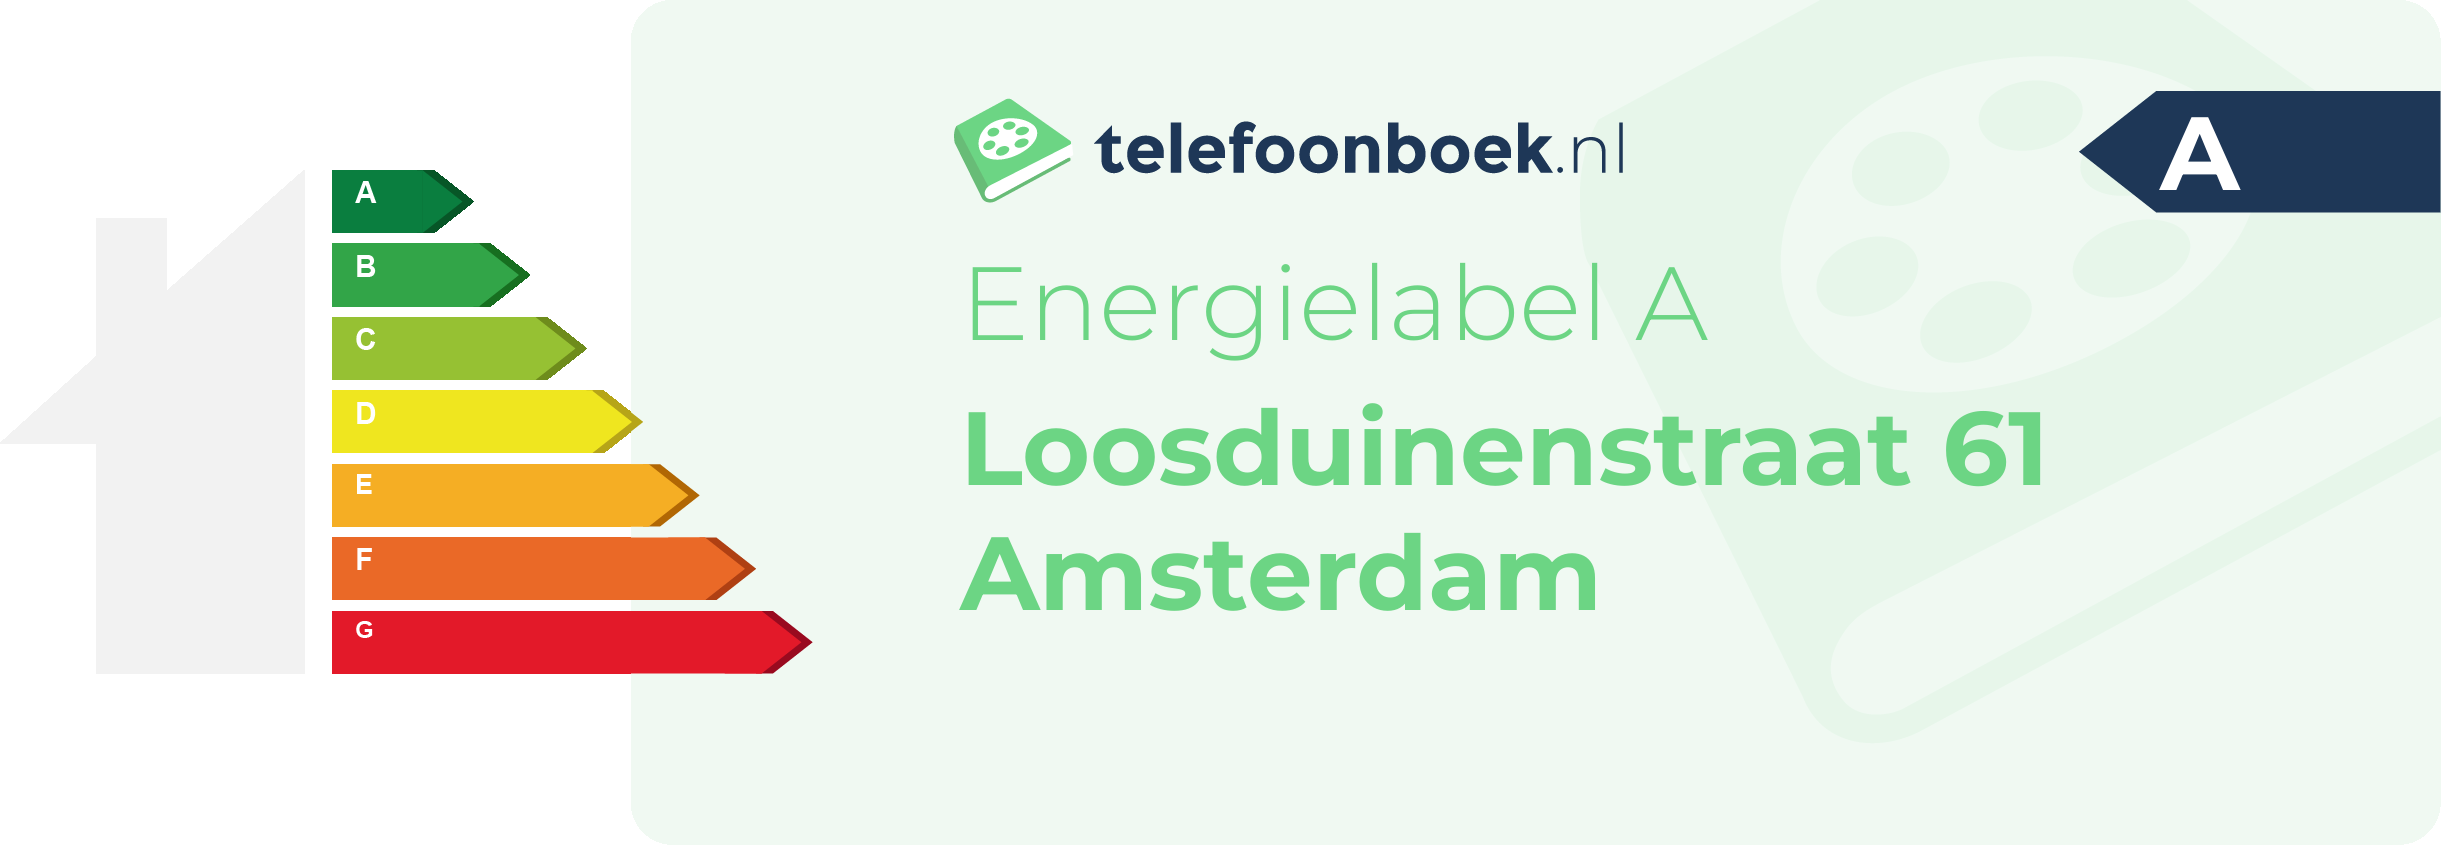 Energielabel Loosduinenstraat 61 Amsterdam